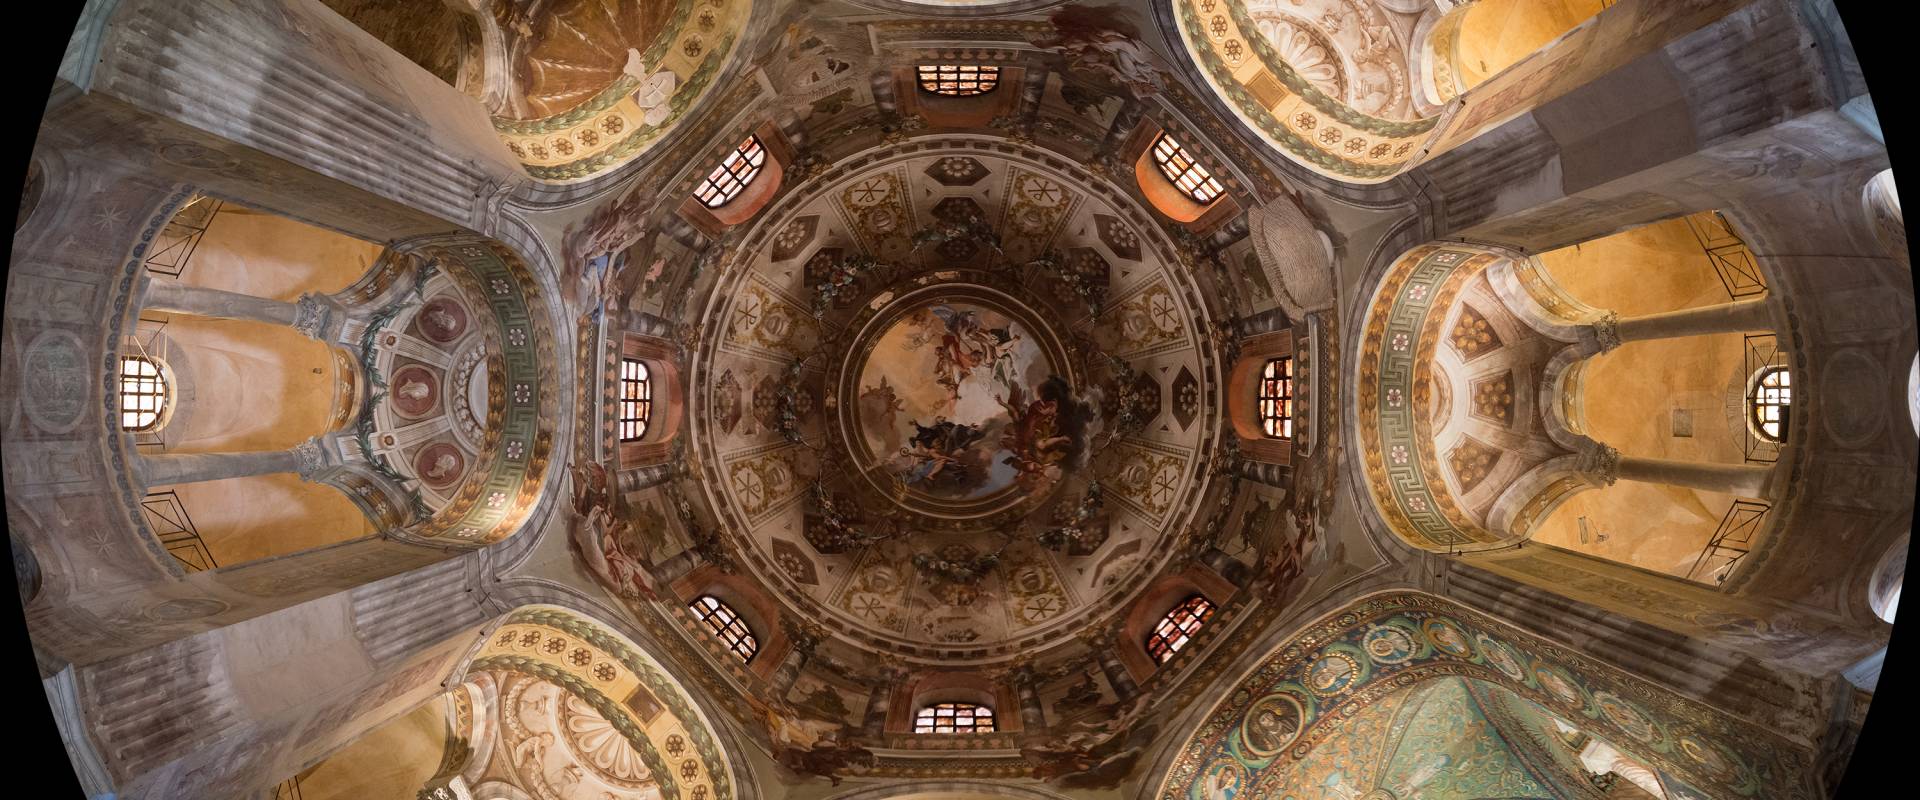 Basilica di San Vitale Cupola photo by Thoodor